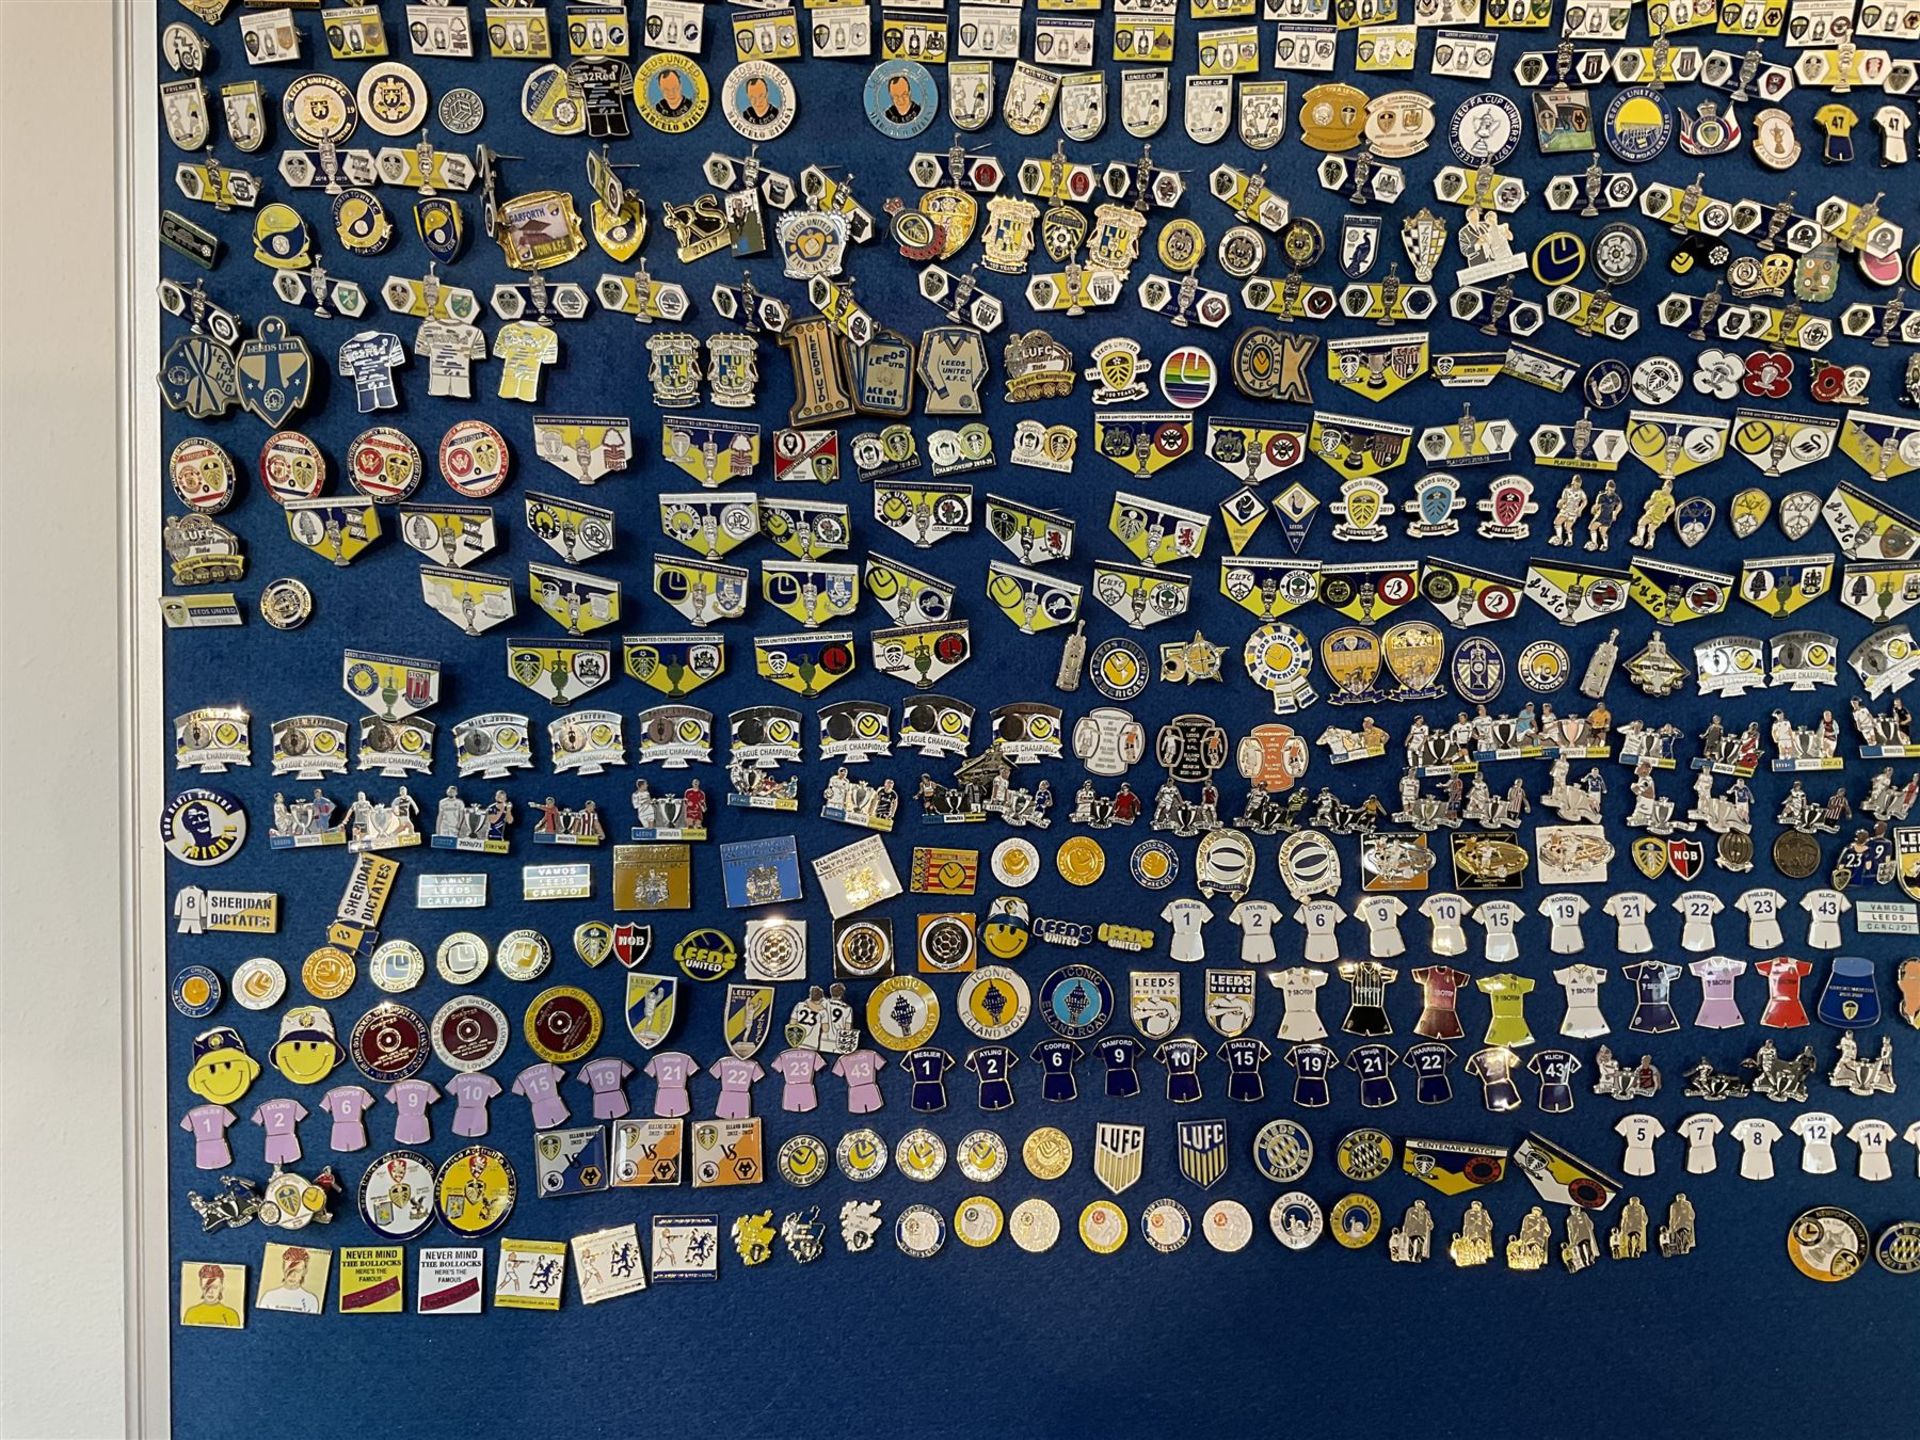 Leeds United football club - approximately six-hundred pin badges including player badges (Bamford - Image 6 of 7